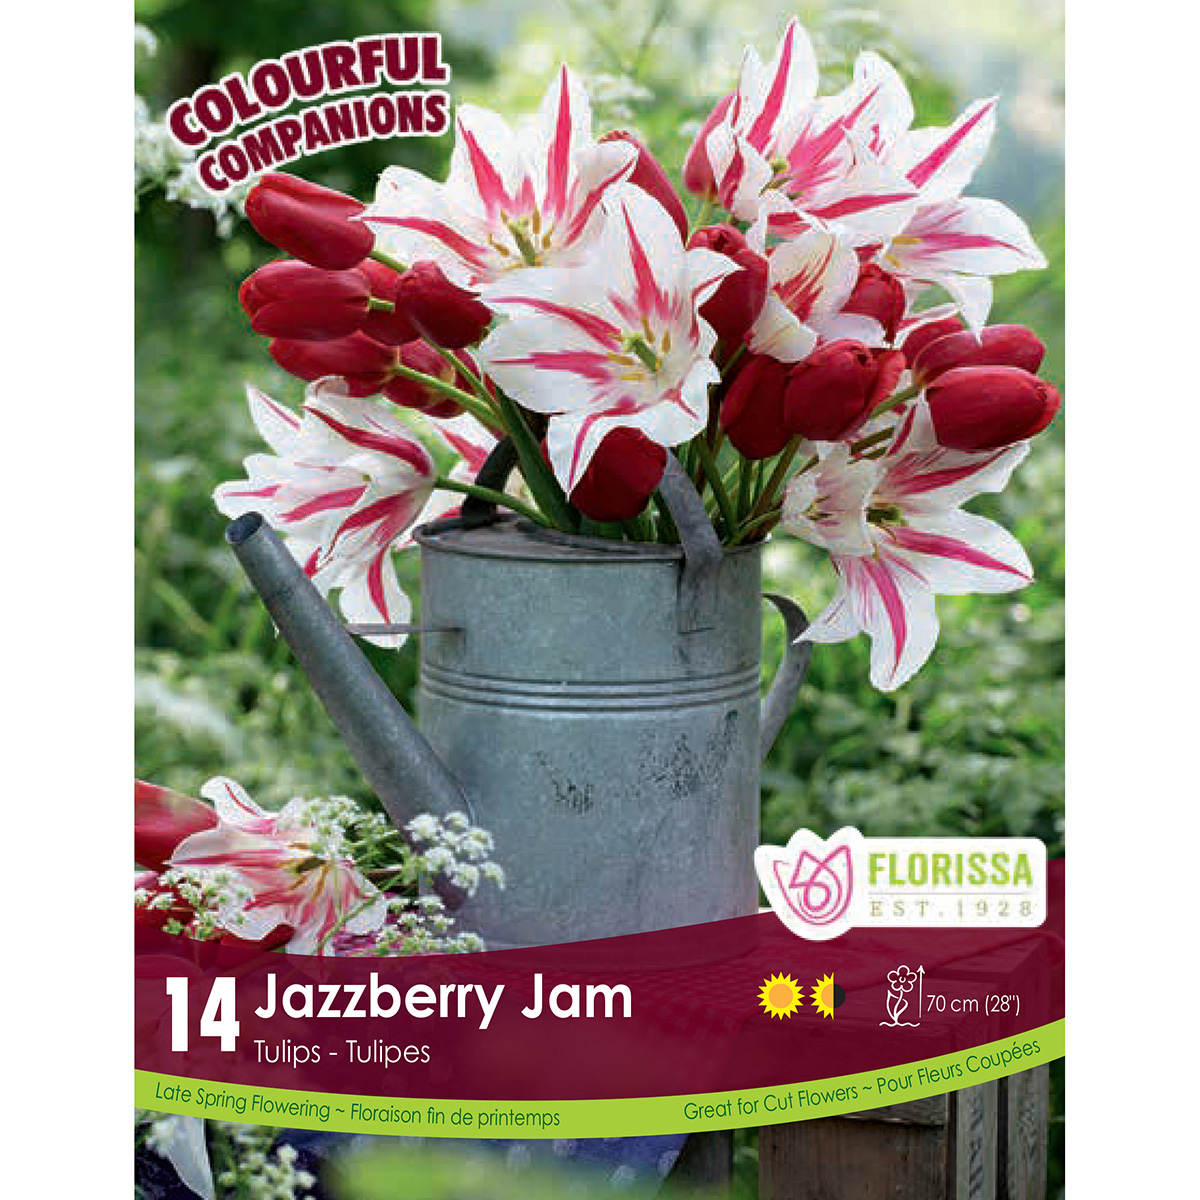 Colourful Companions Tulipa 'Jazzberry Jam' Bulbs